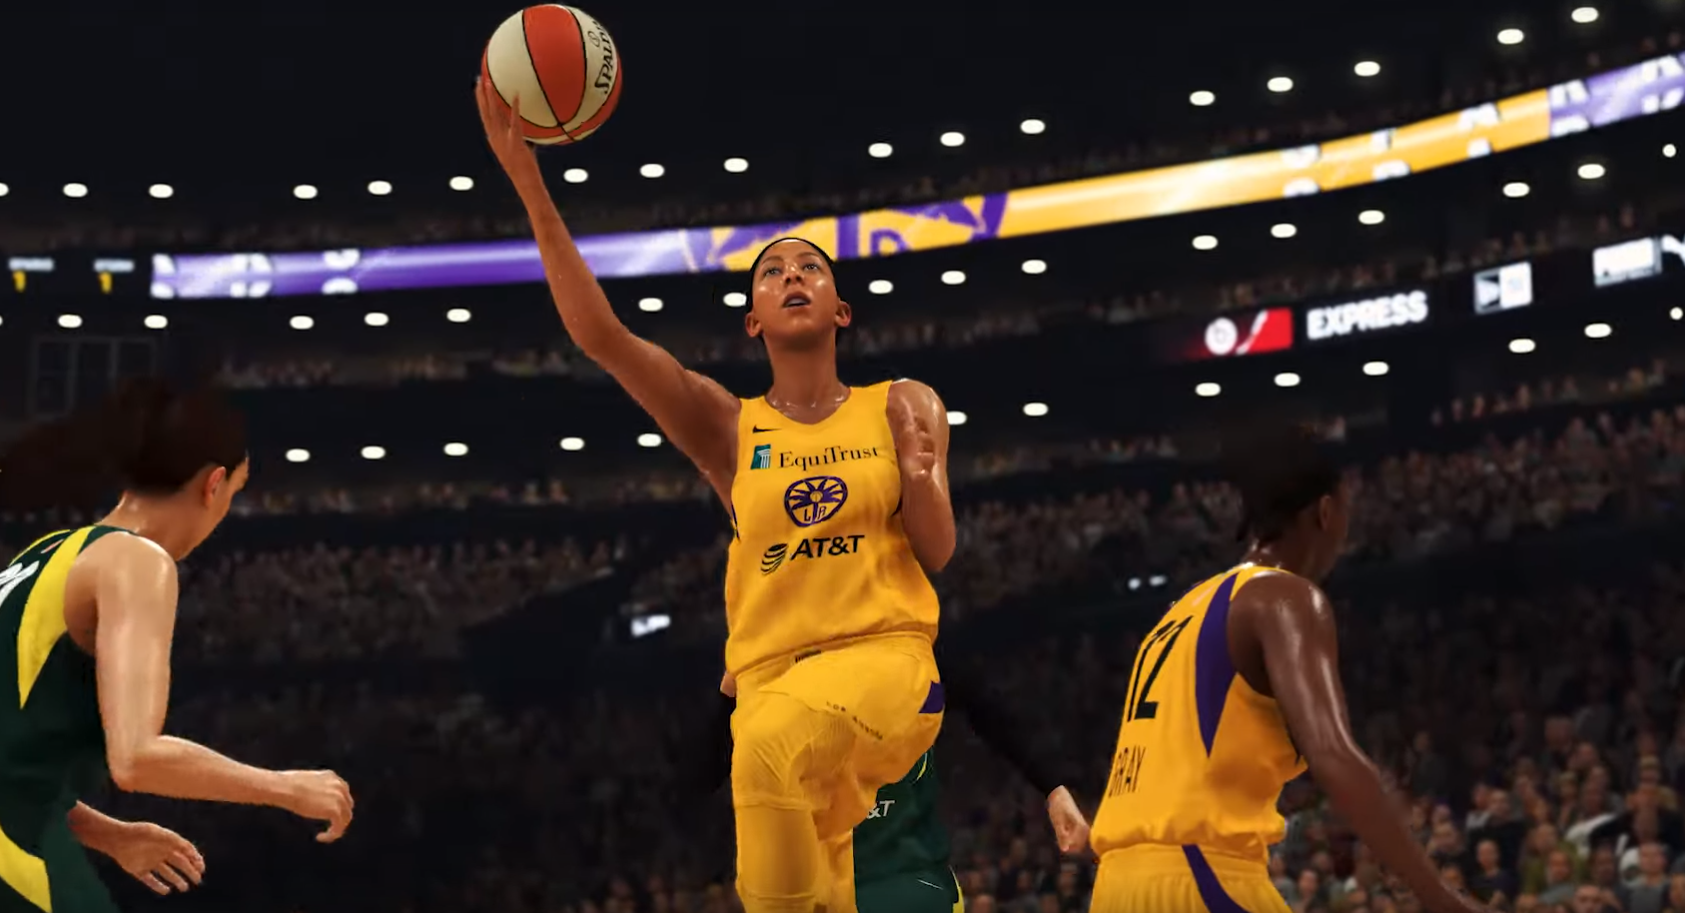 The WNBA is finally here in NBA 2K20